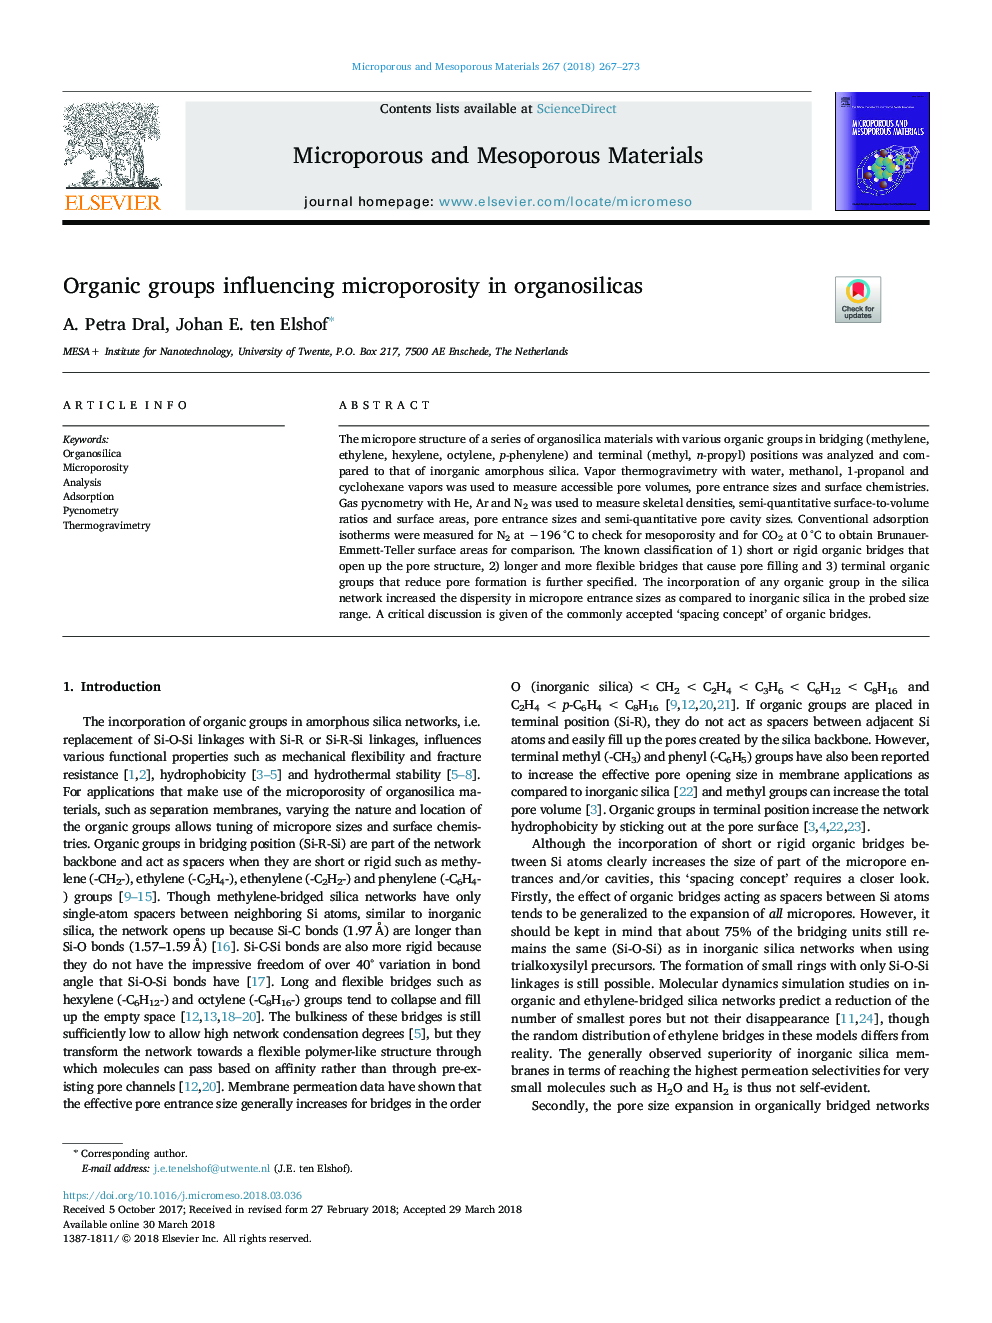 Organic groups influencing microporosity in organosilicas